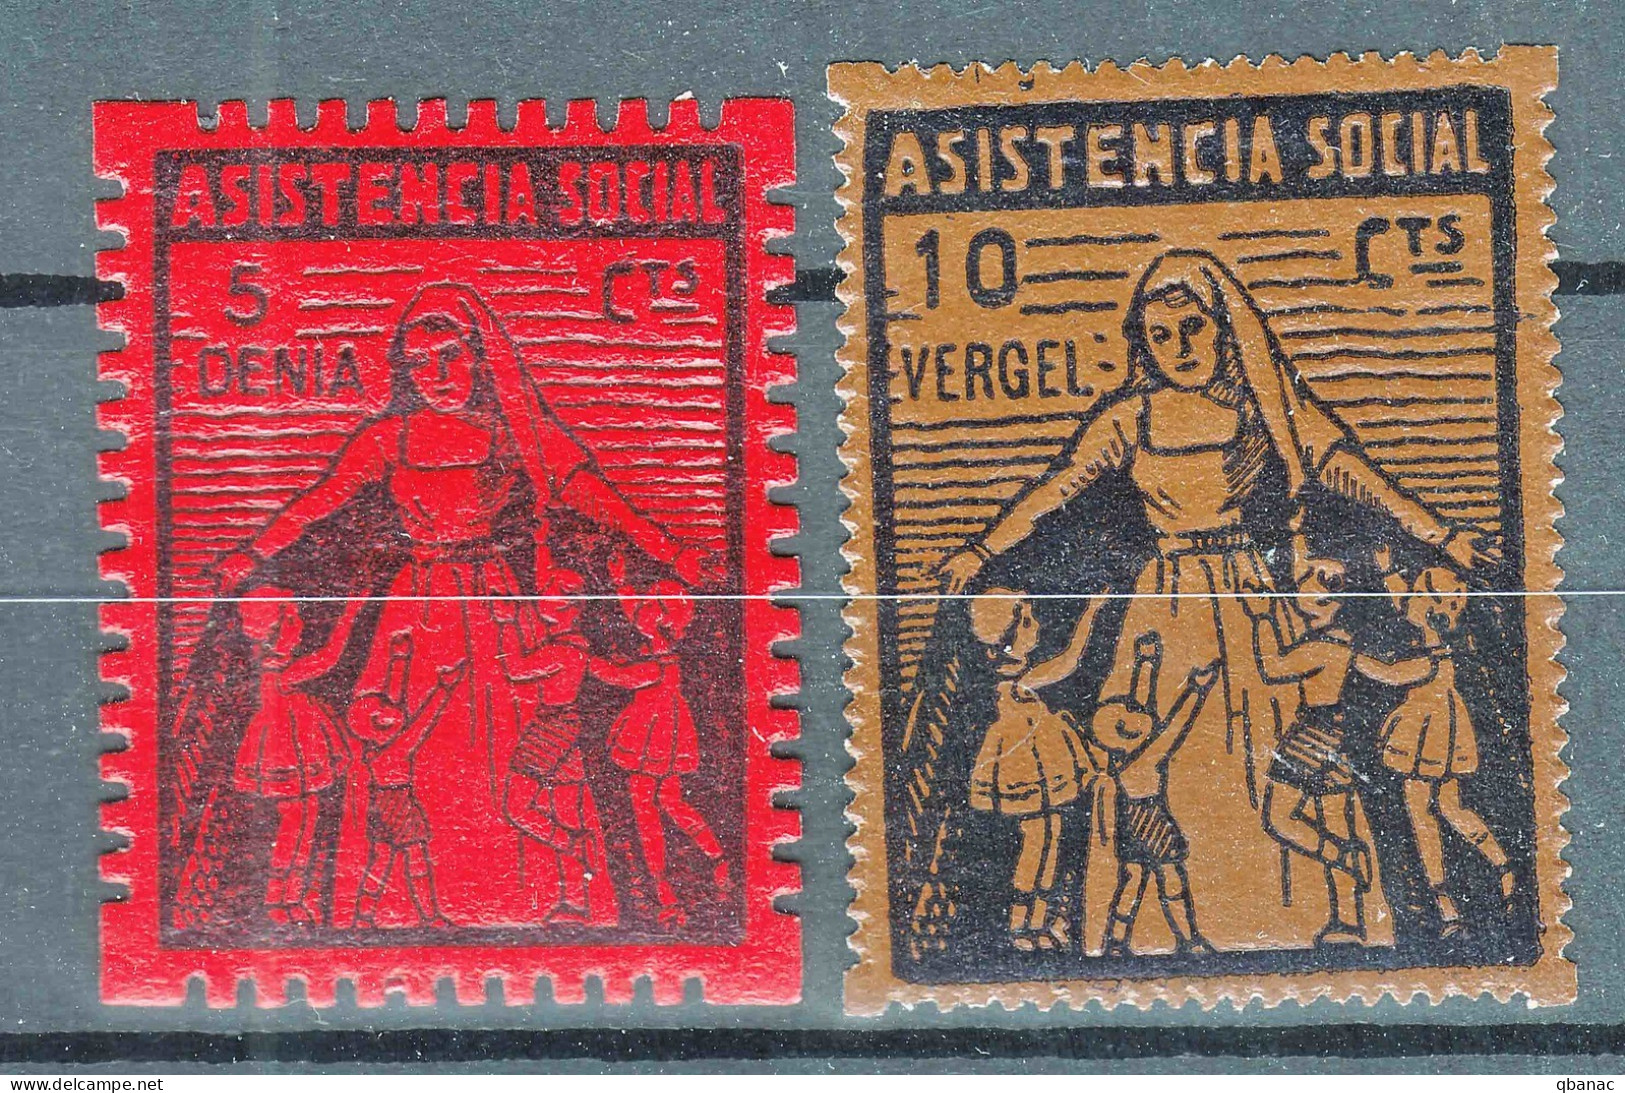 Spain, Two Vignettes Assistencia Social Denia/Vergel - Spanish Civil War Labels